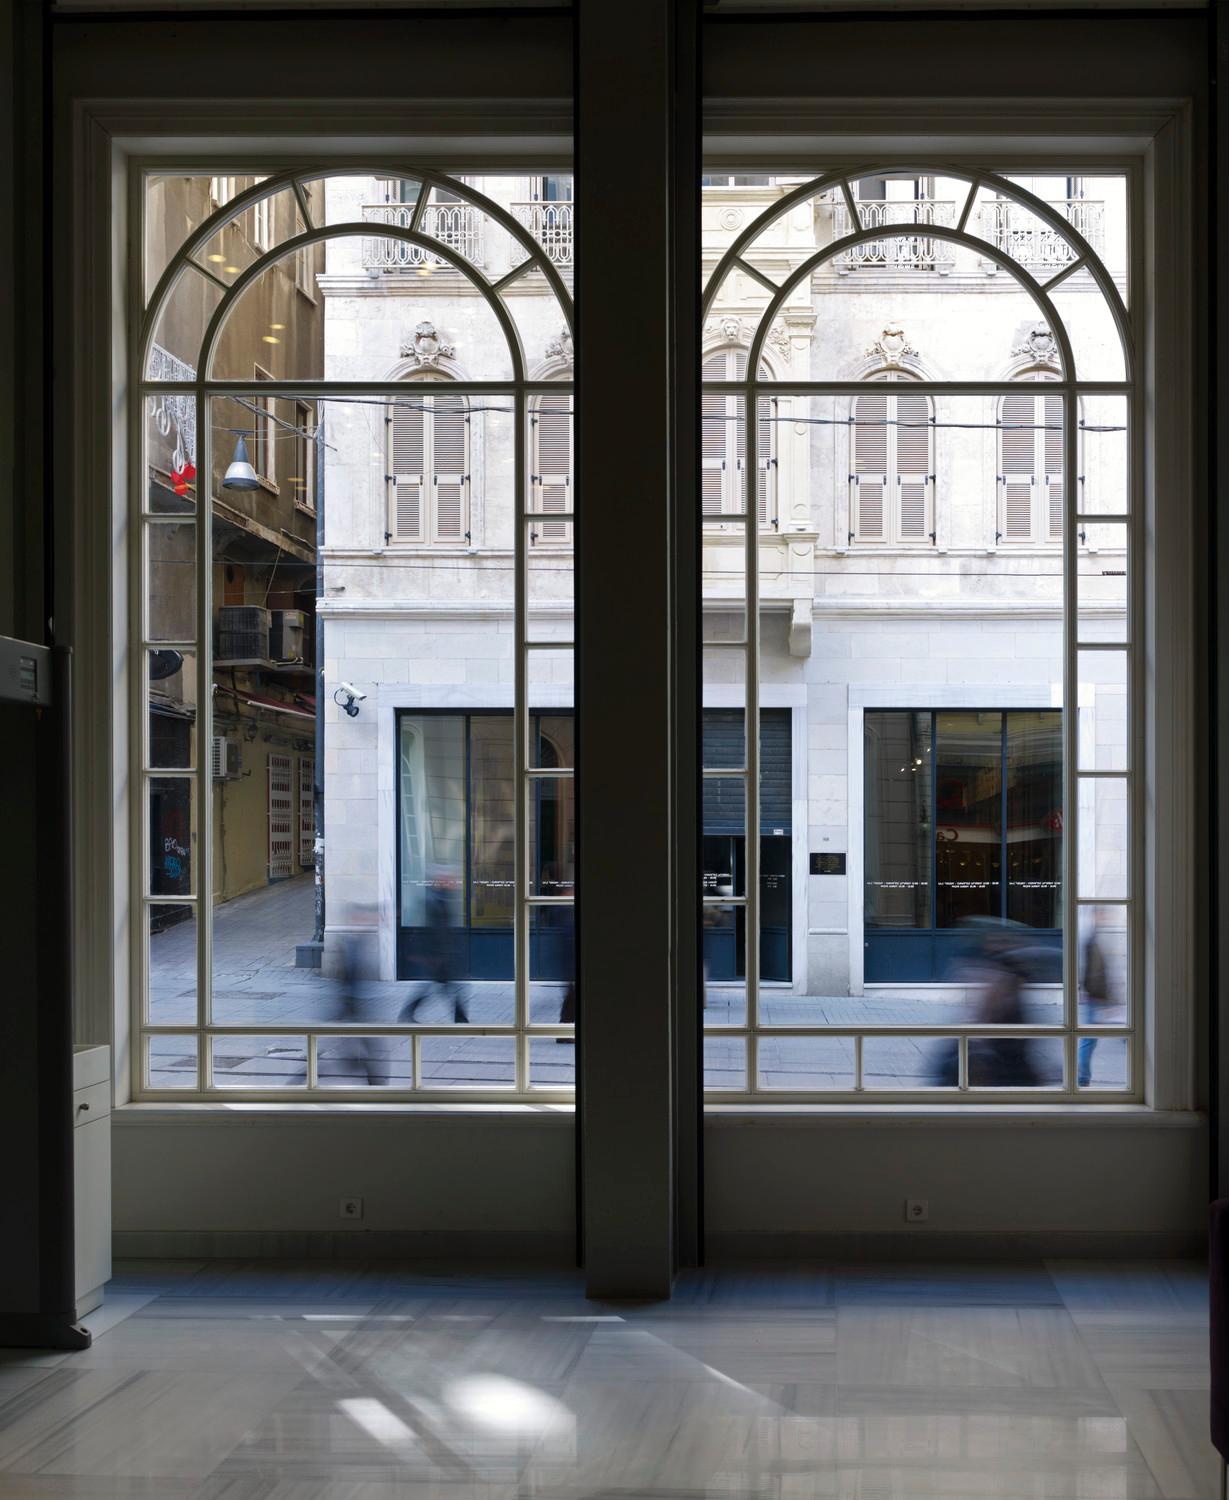 Istiqal Caddesi view, seen through glass doors of lobby space